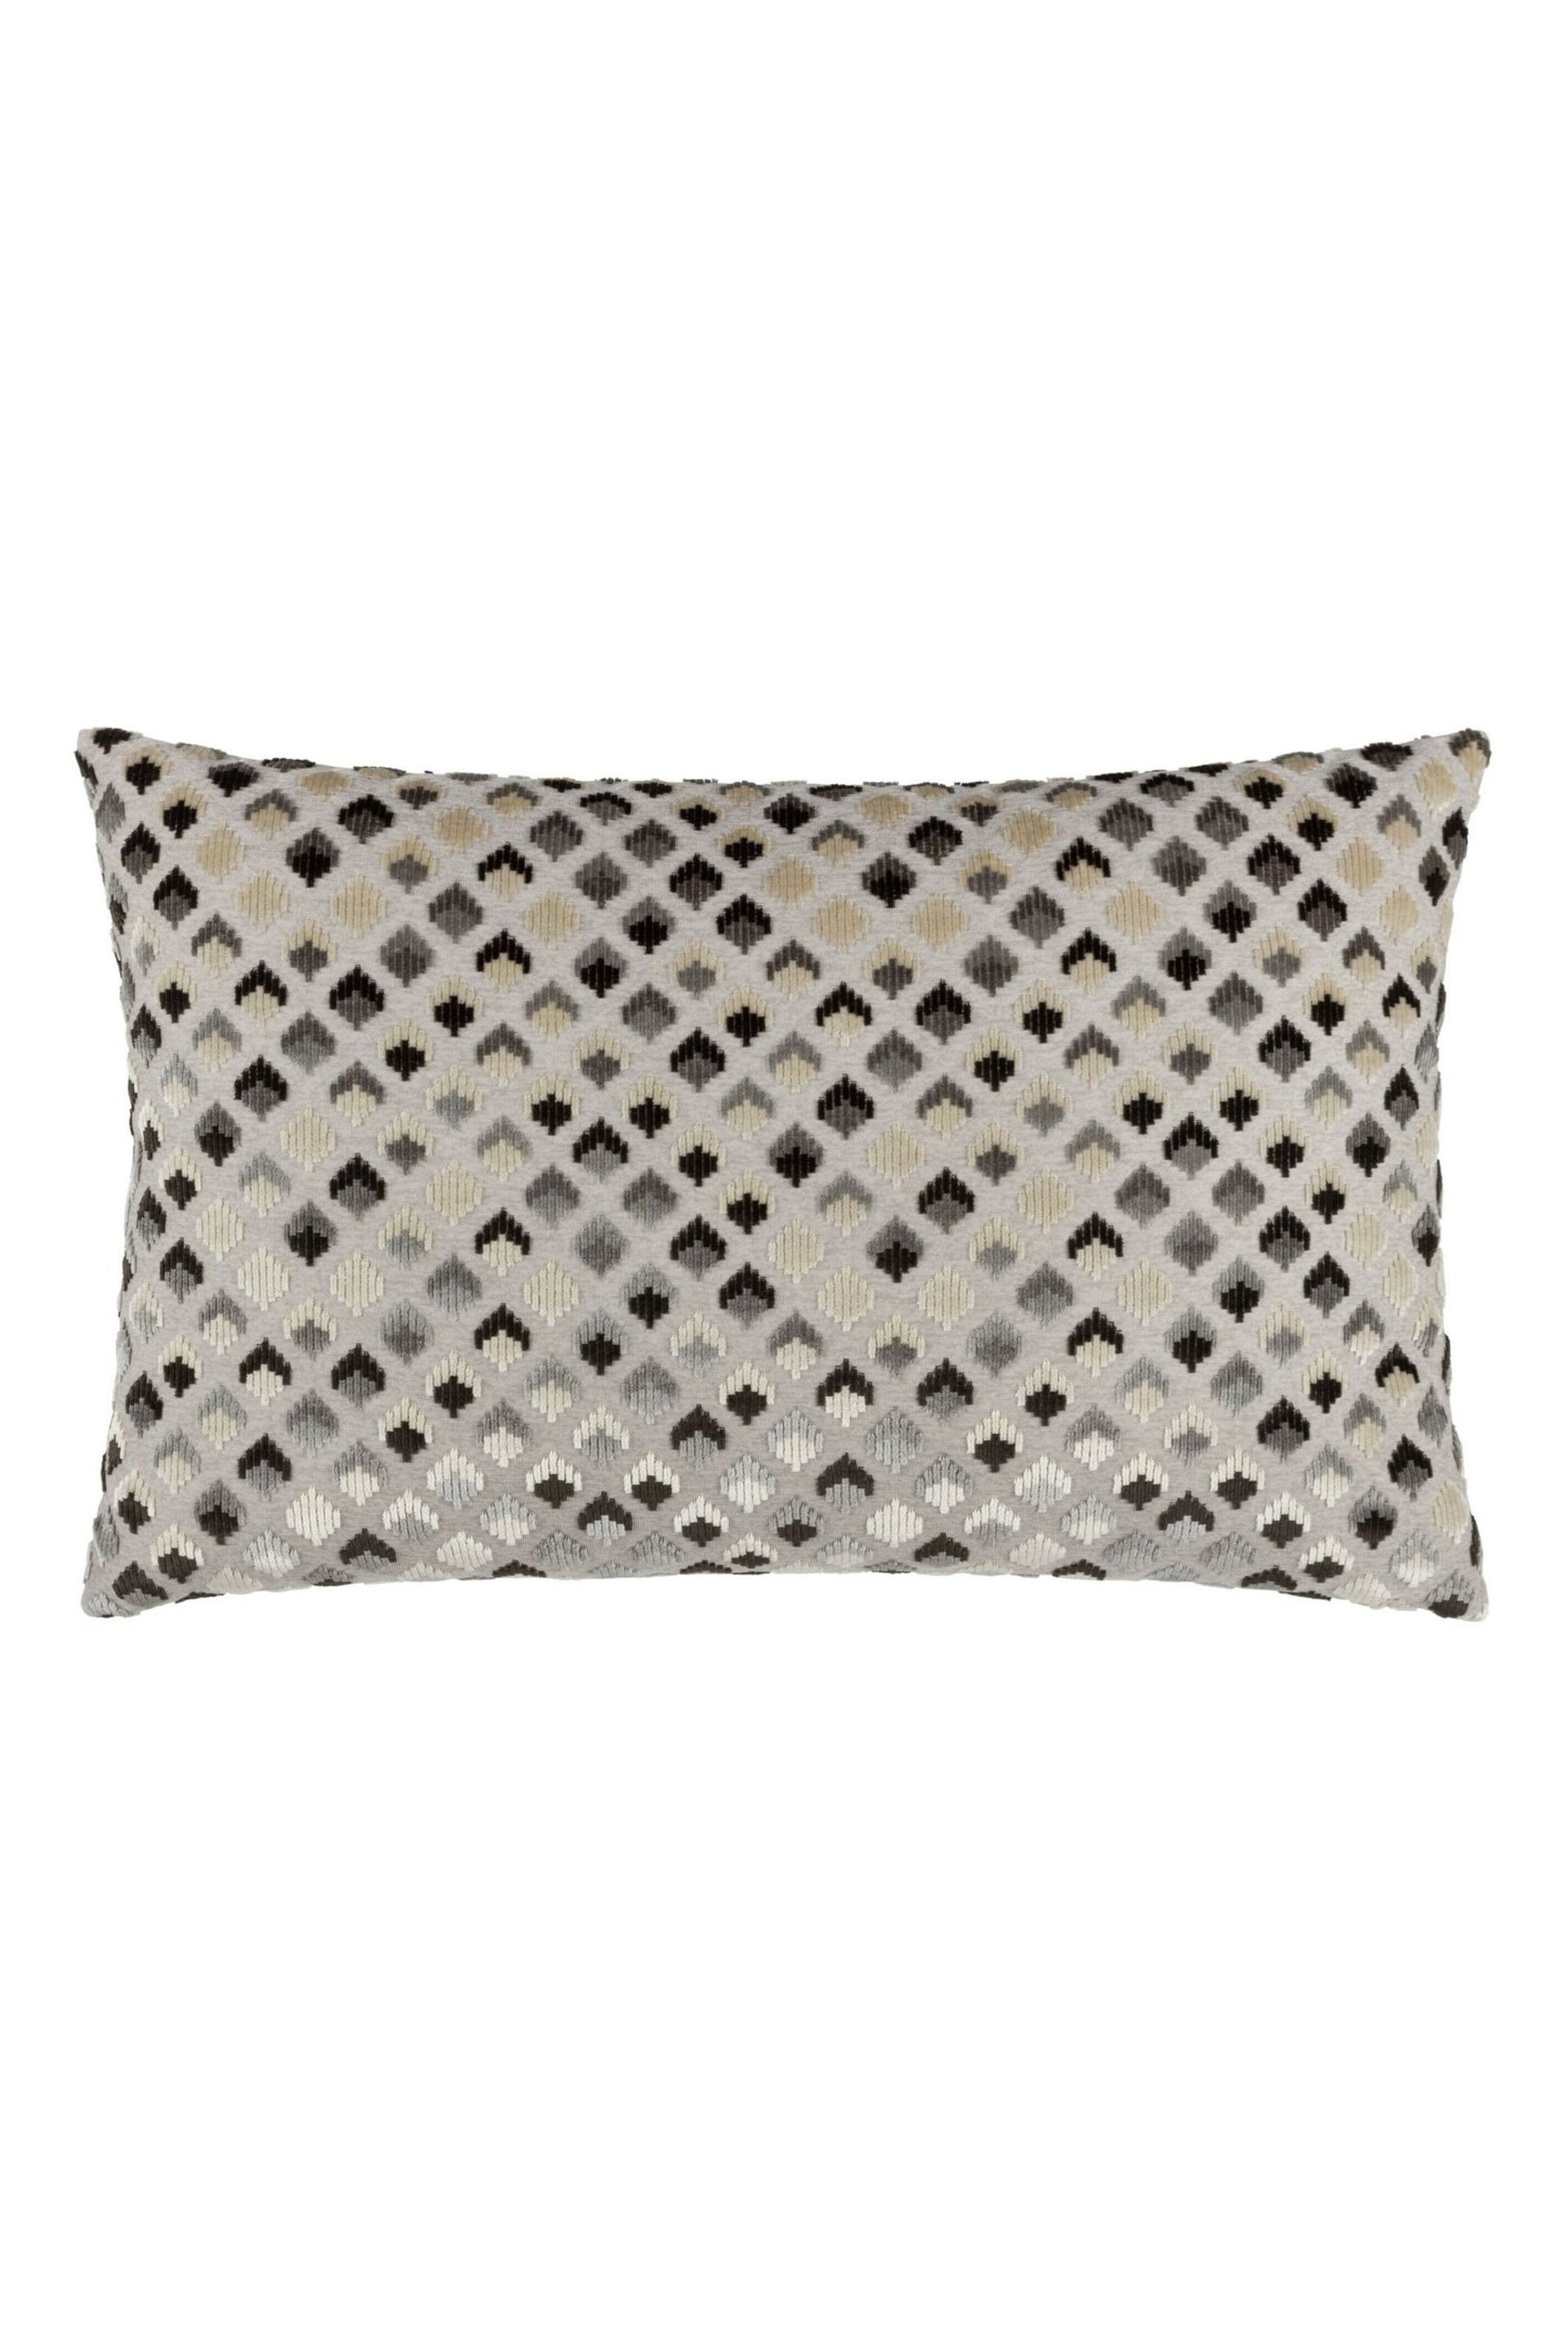 Paoletti Grey Lexington Velvet Jacquard Polyester Filled Cushion - Image 1 of 5